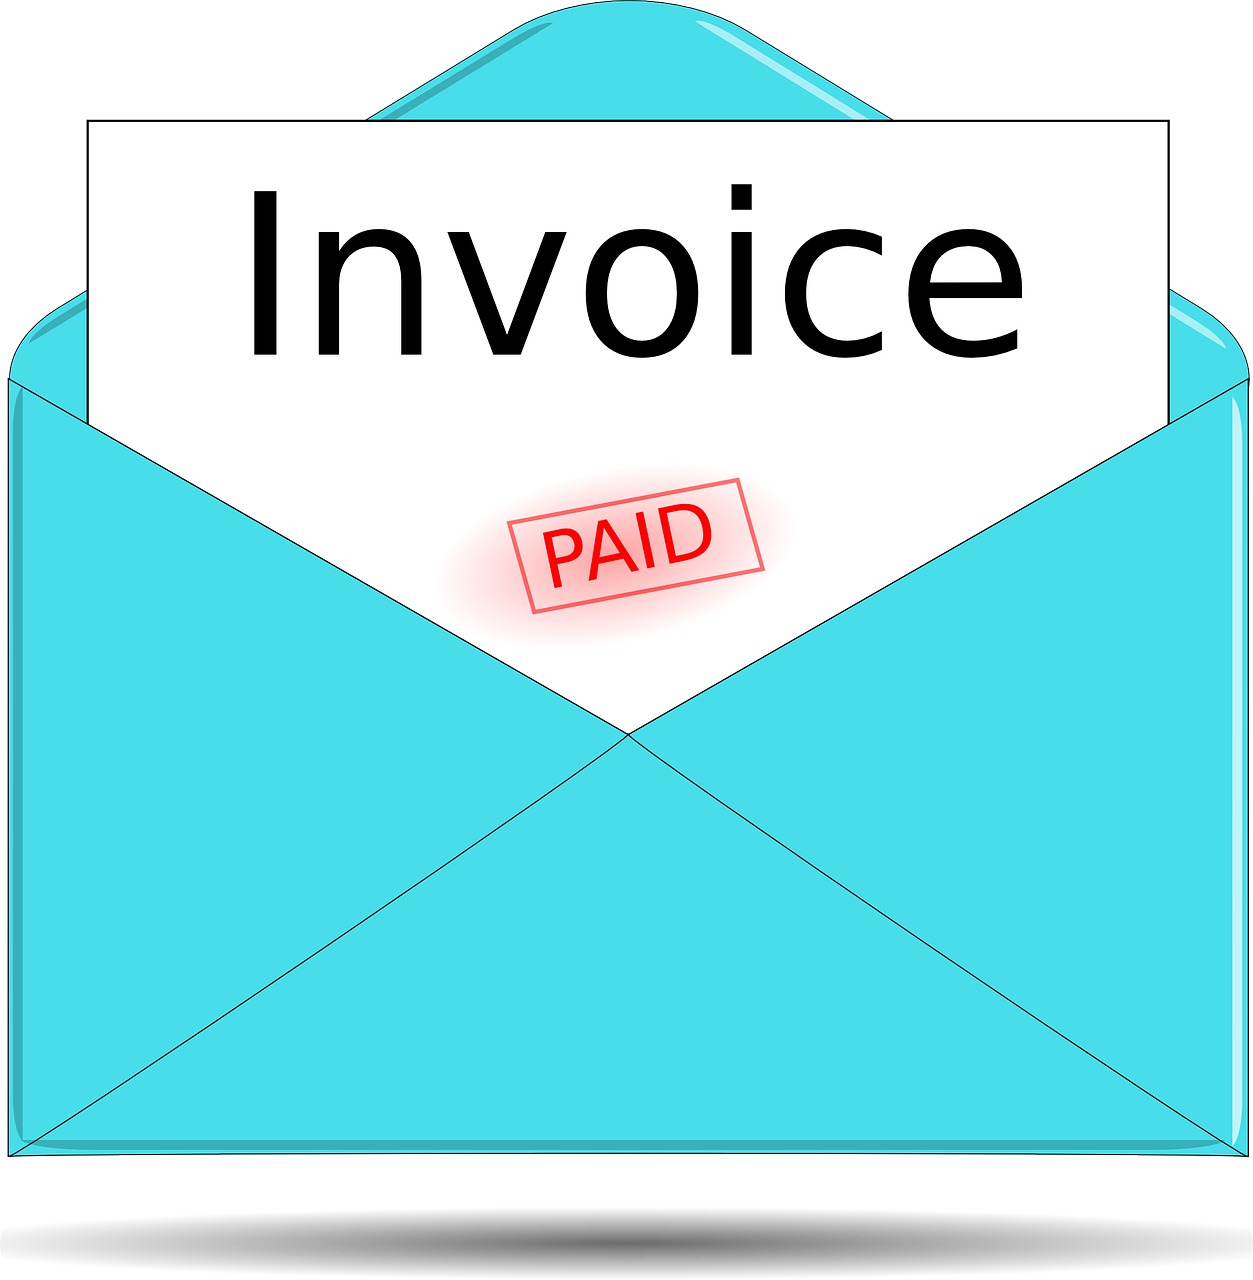 Paid invoice 